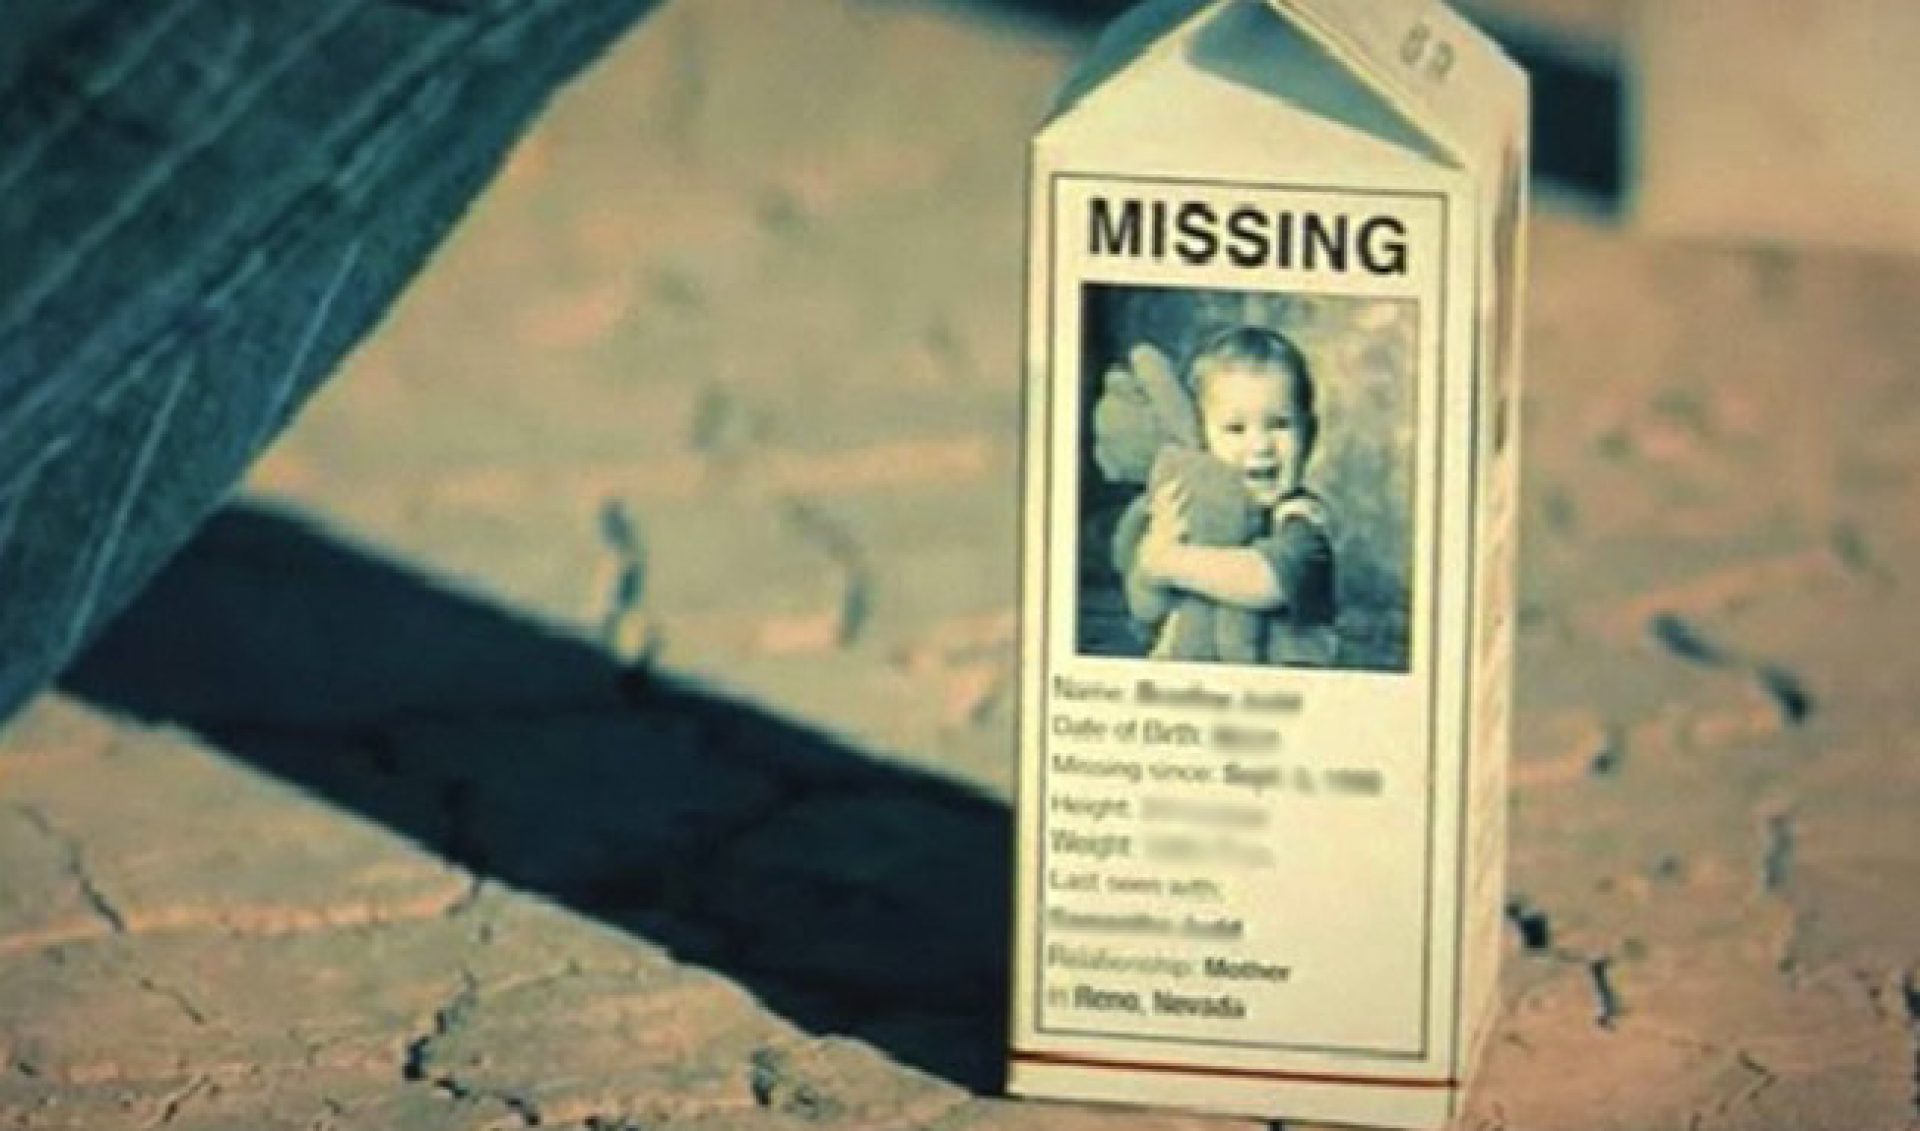 Missing child. Missing children on Milk cartons. Missing children. Missing meaning.